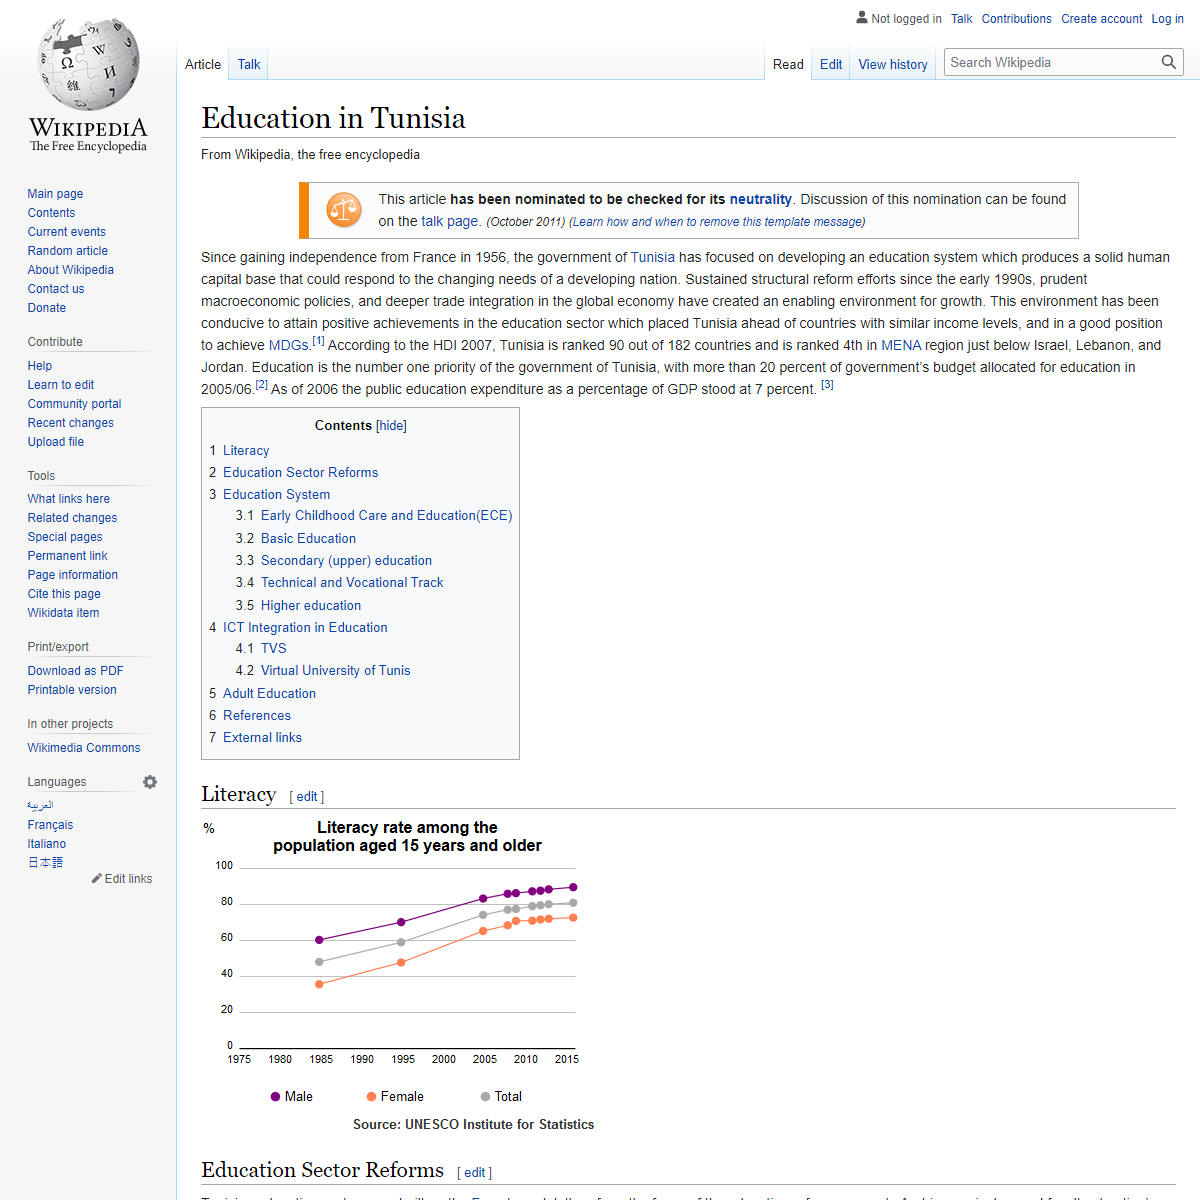 A complete backup of https://en.wikipedia.org/wiki/Education_in_Tunisia